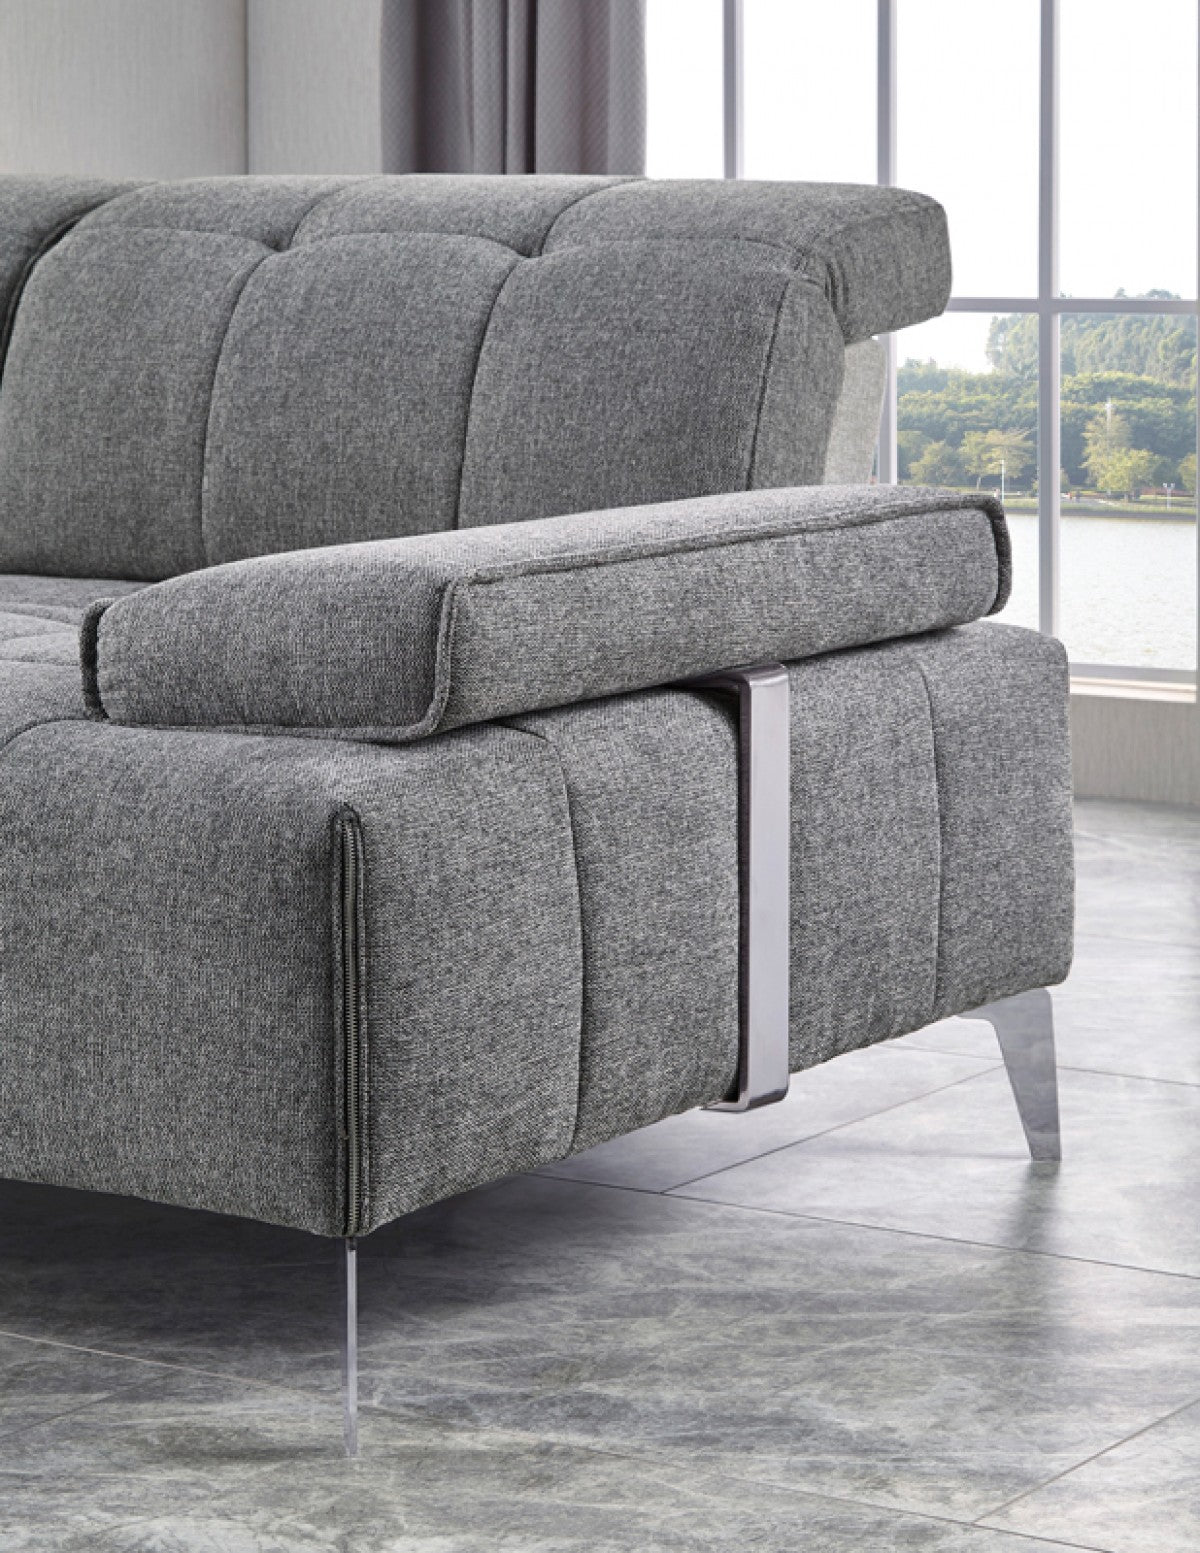 Divani Casa Nash - Modern Grey Fabric Sectional Sofa Adjustable Backrest